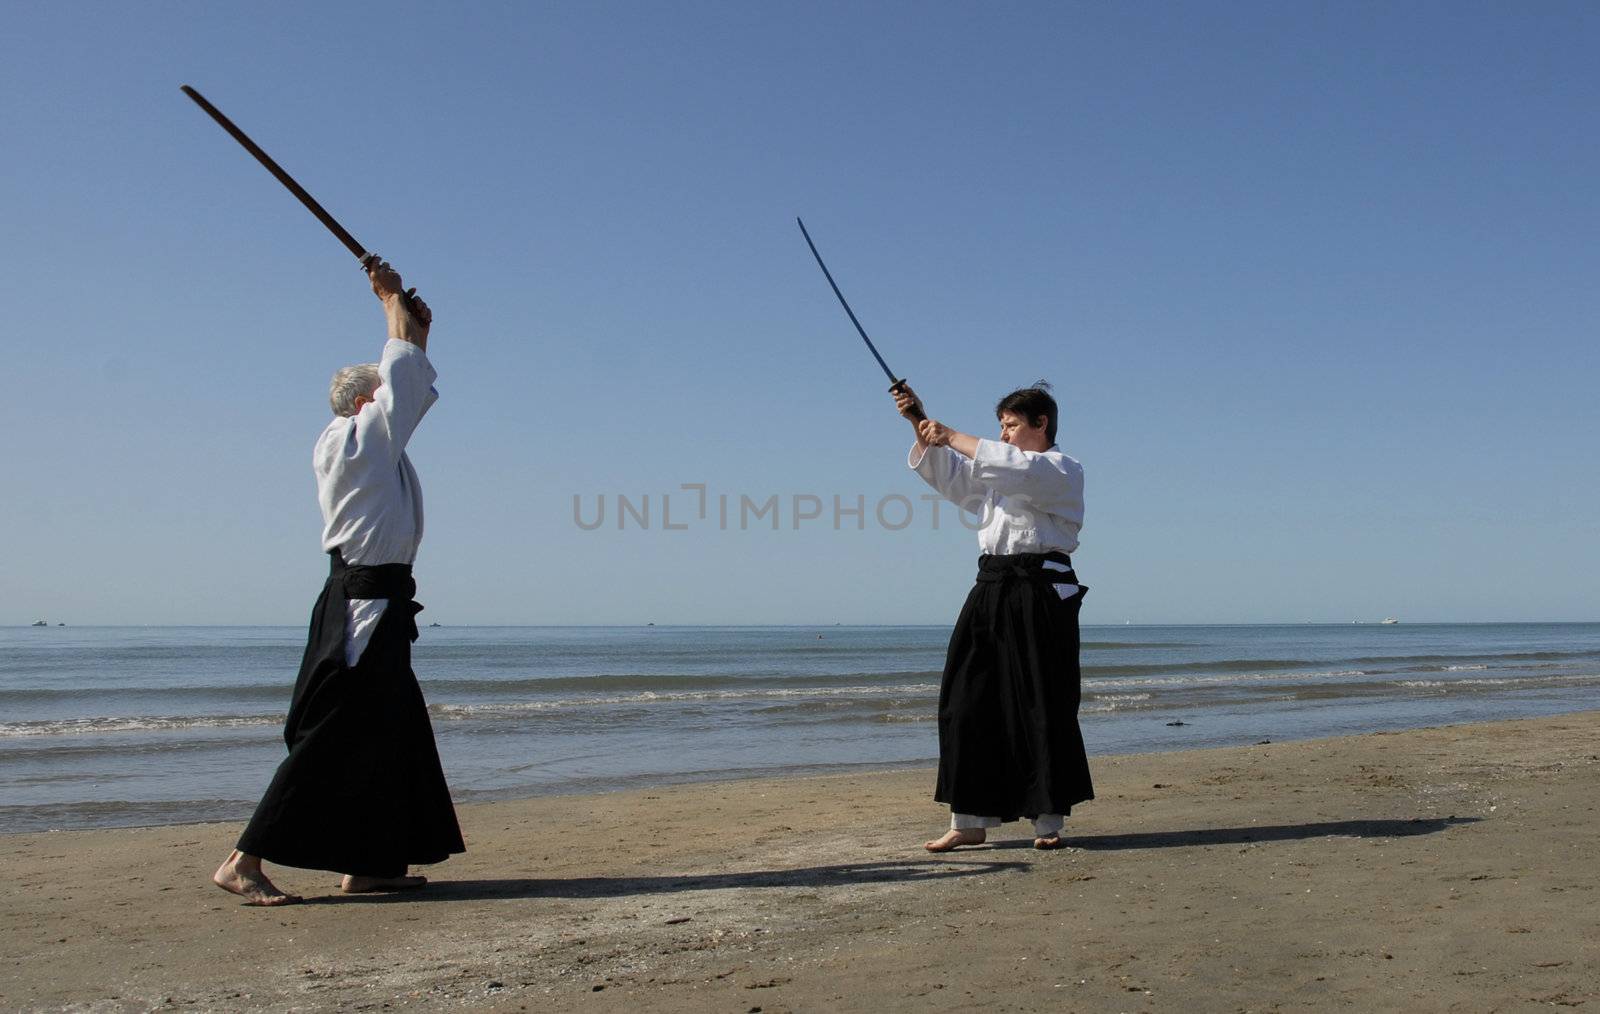 aikido on the beach by cynoclub